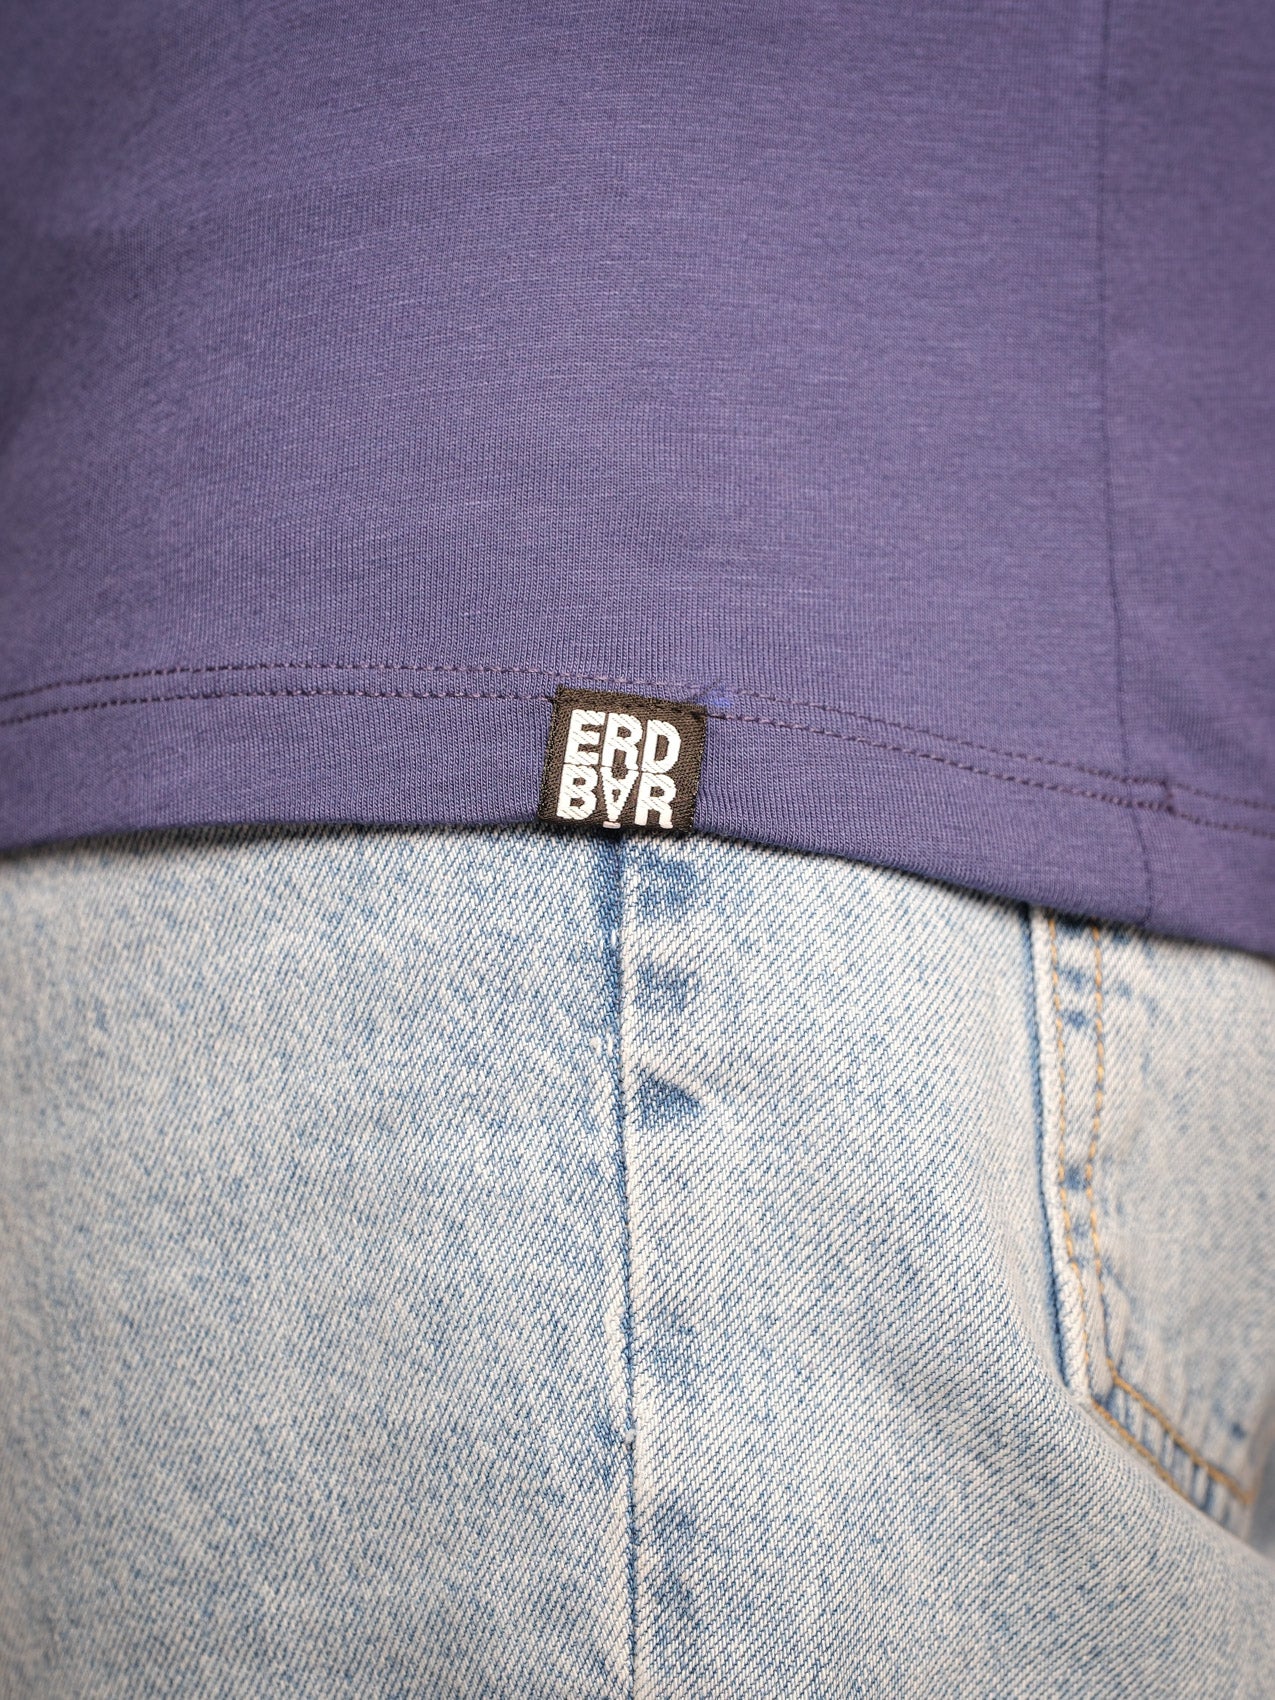 Herren T-Shirt ERDBÄR (blau)